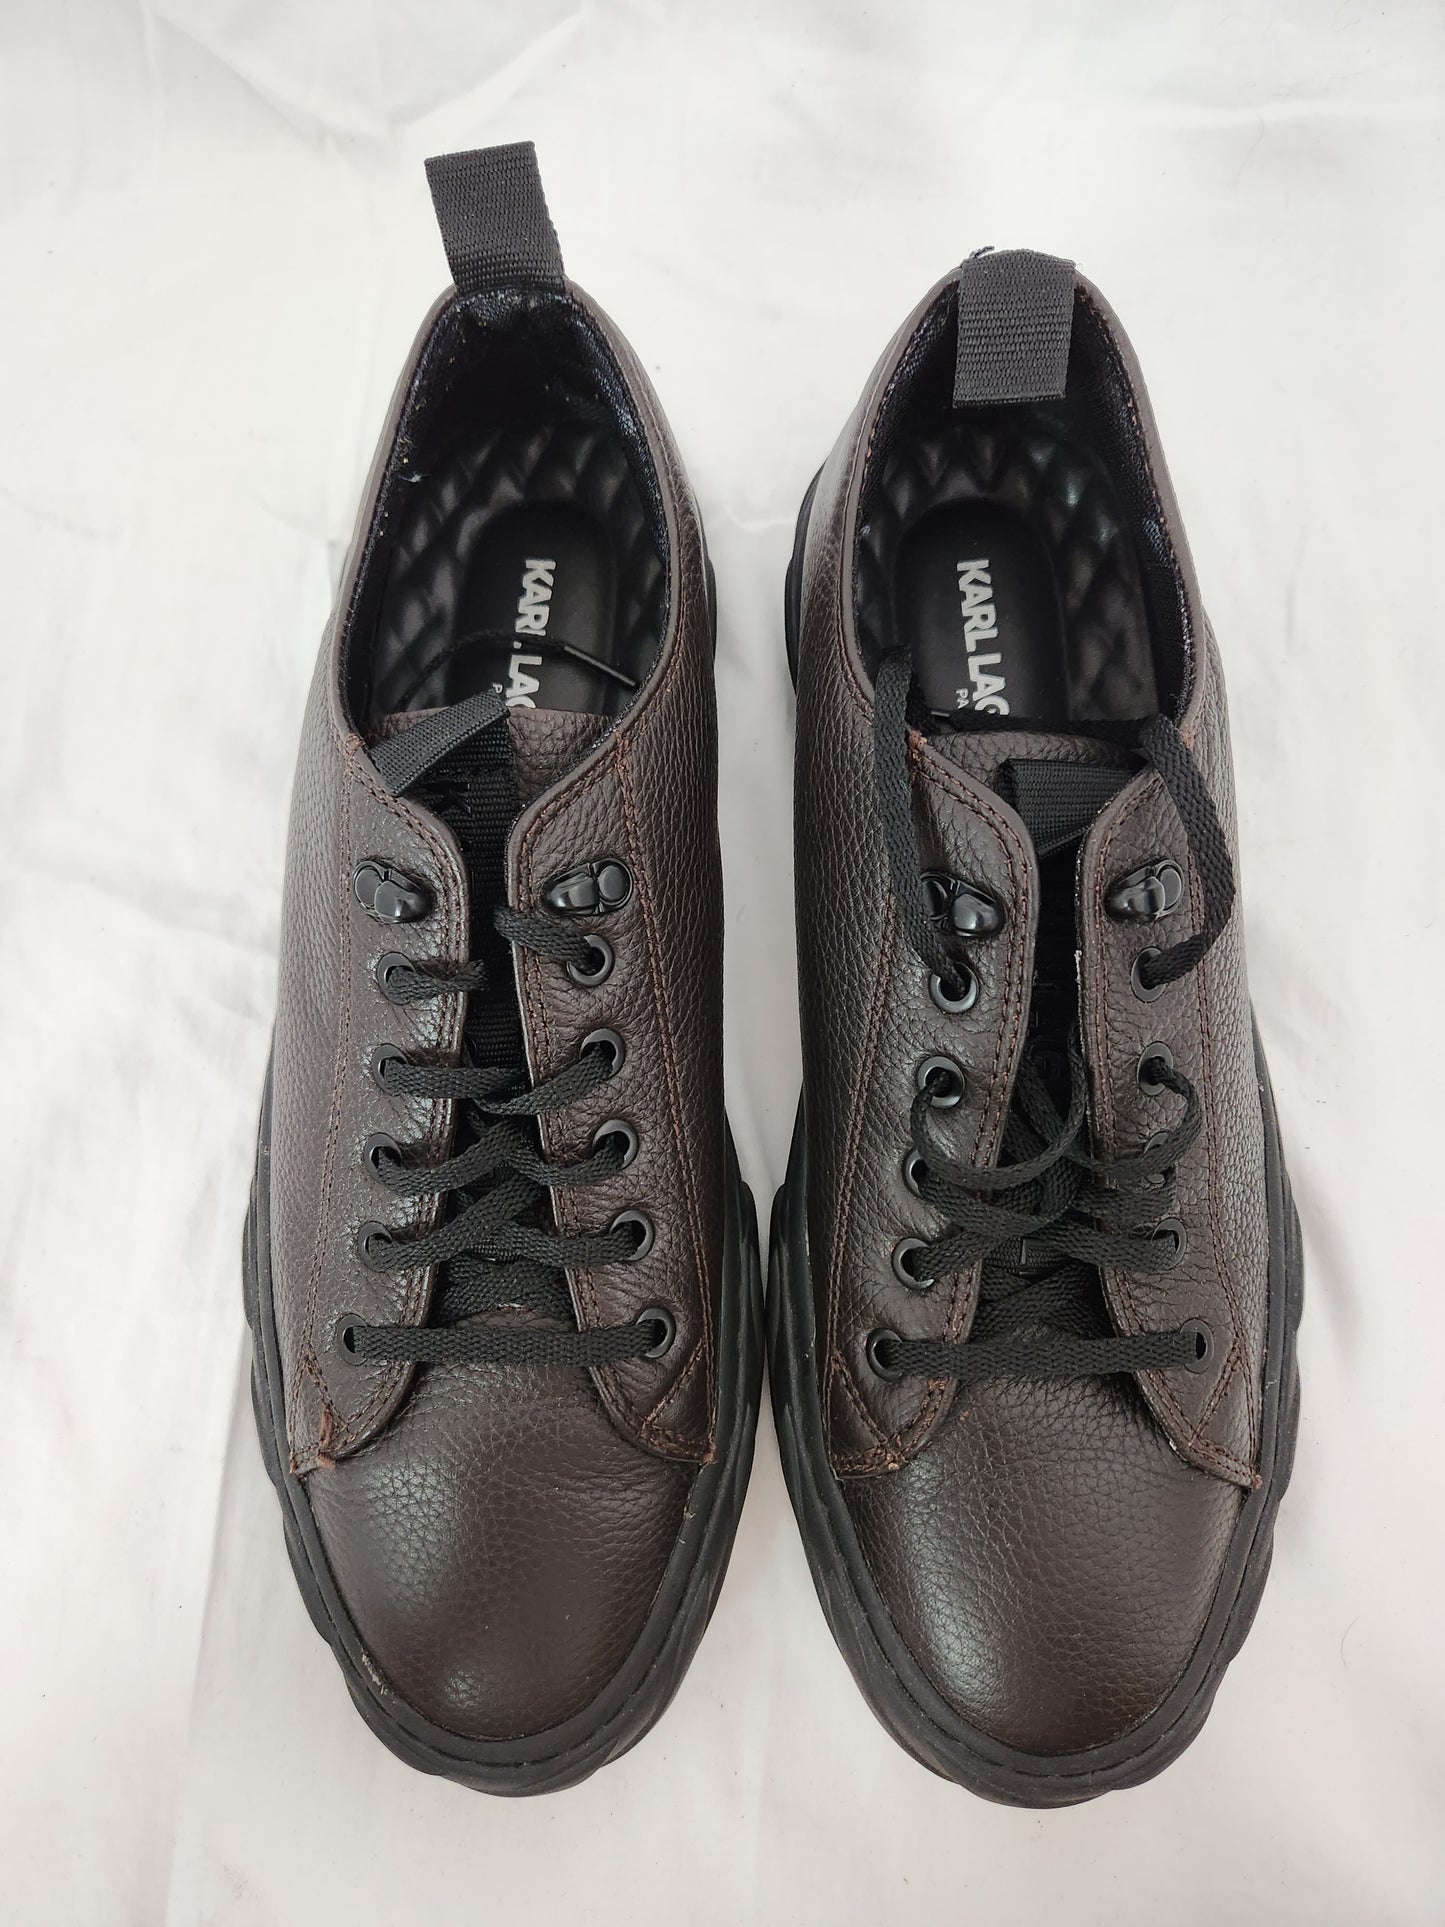 NWOB - KARL LAGERFELD PARIS brown Leather Low-Top Sneakers - Size: 10M